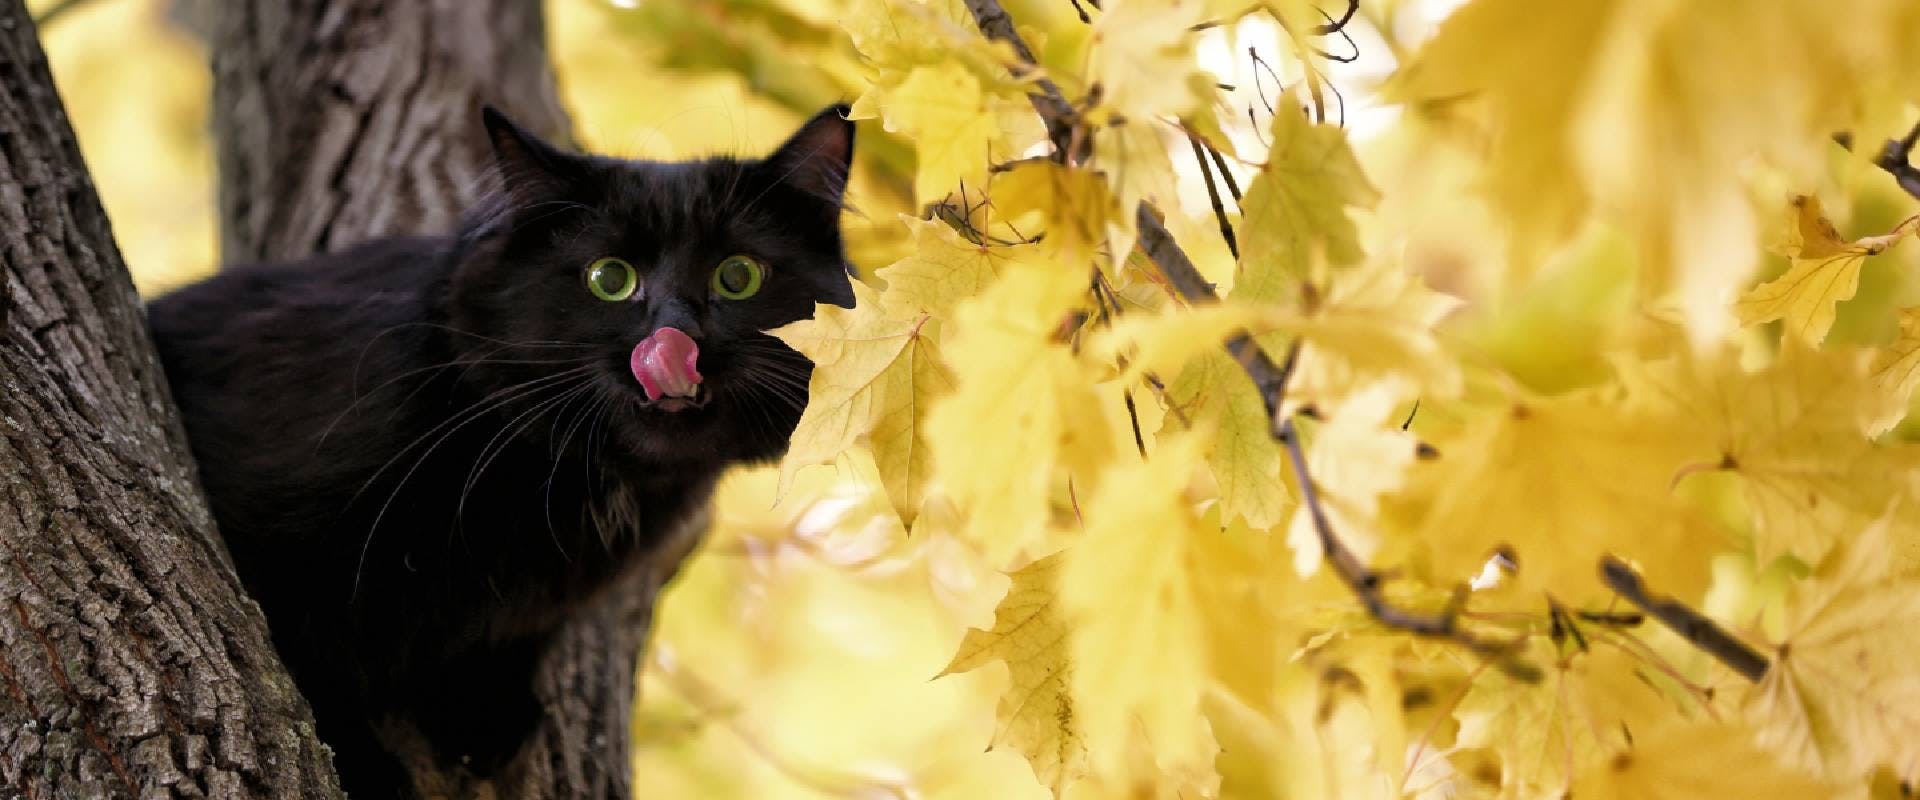 Black cat up an autumnal tree